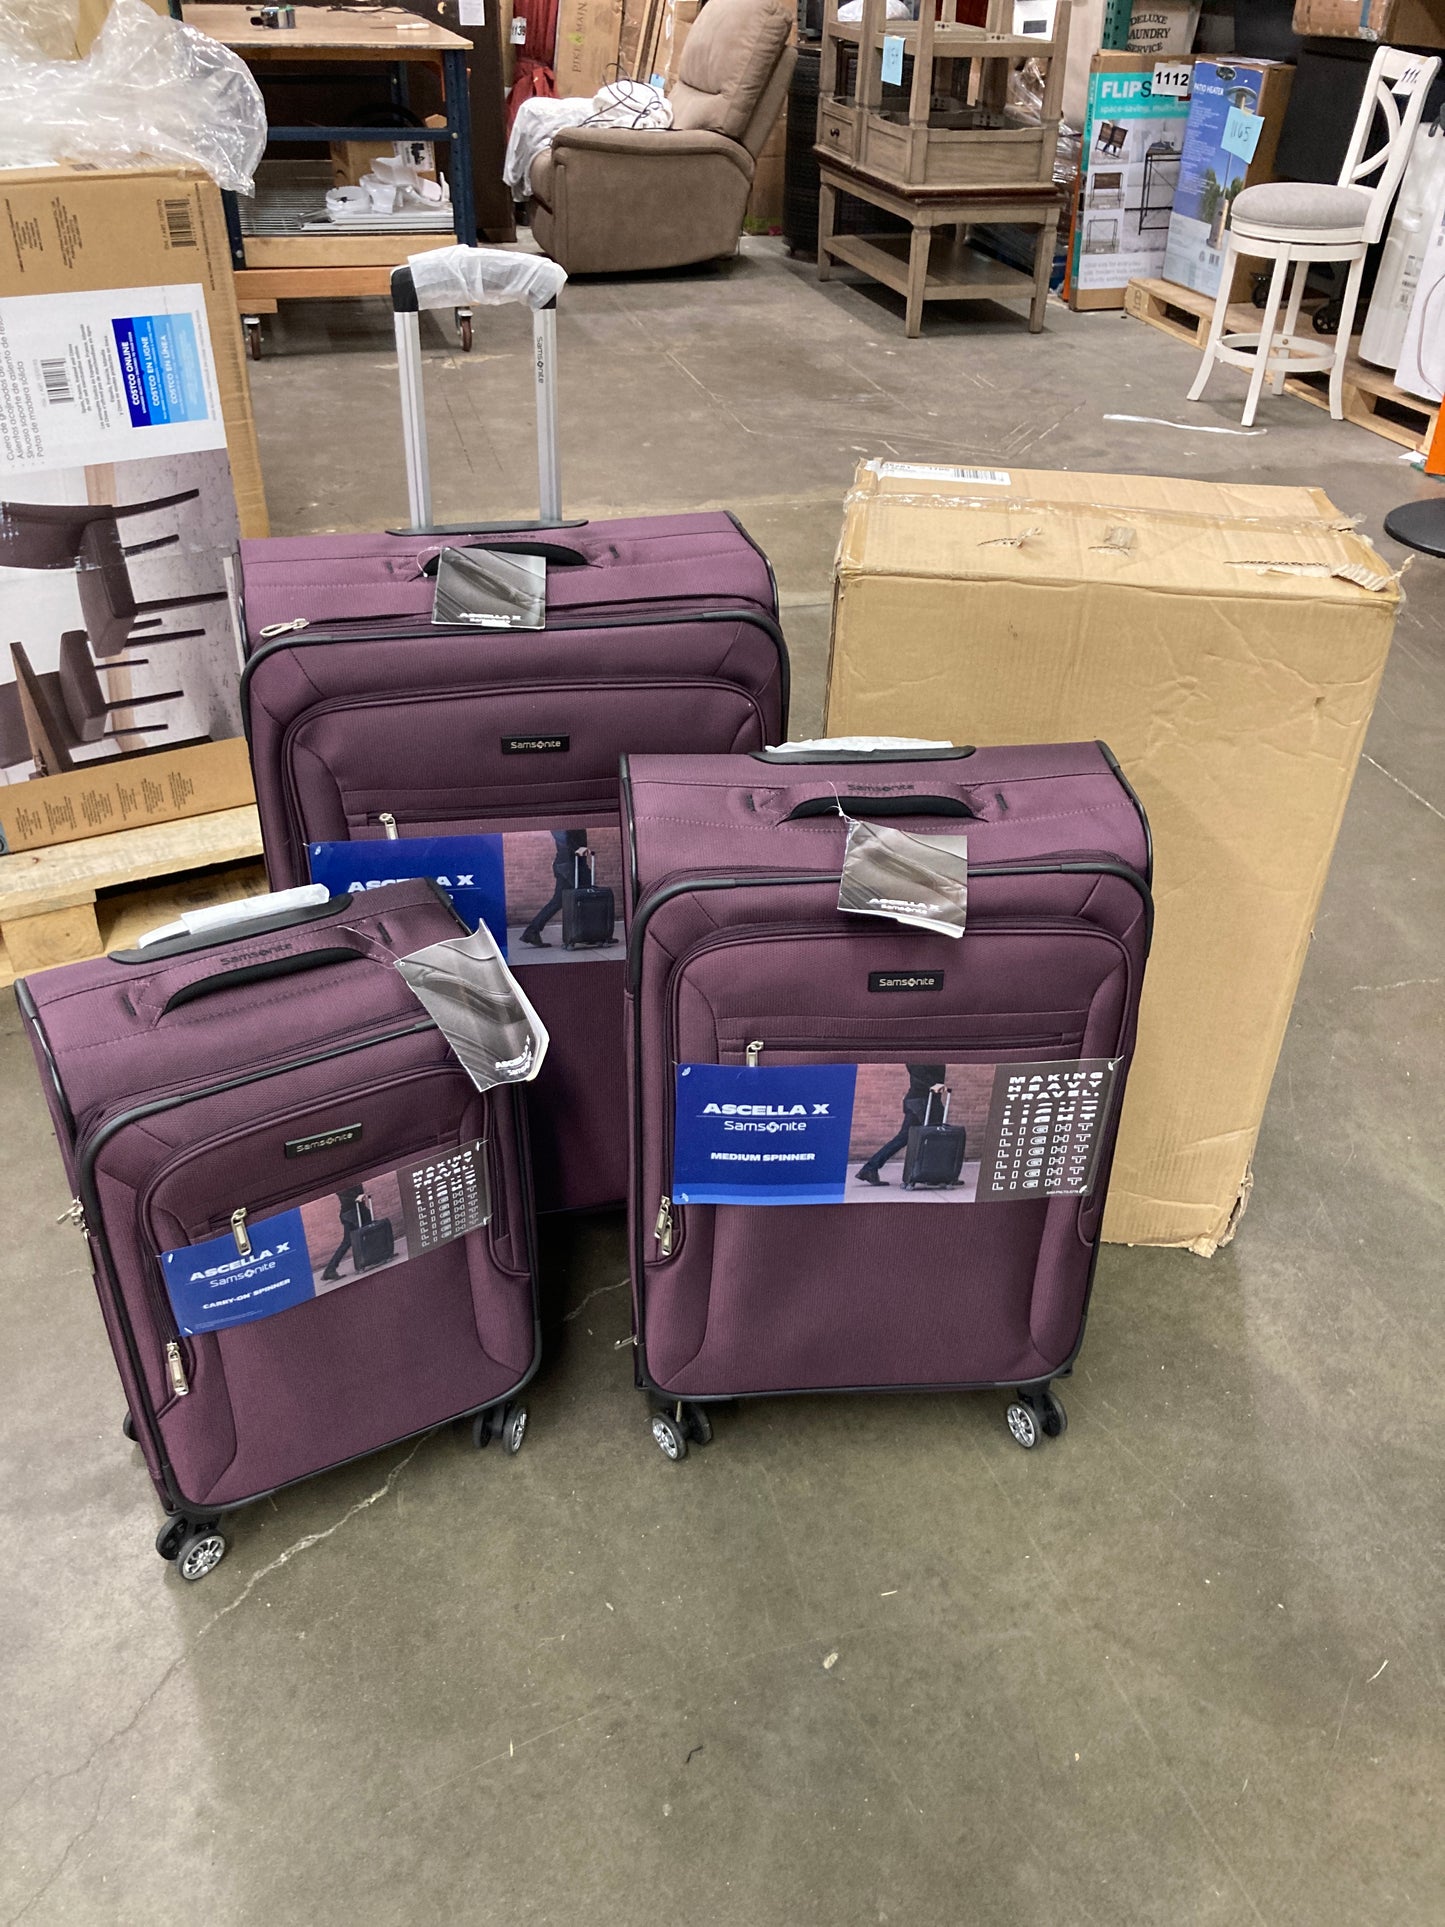 NEW in Box - Samsonite Ascella X Softside Purple 3 Piece Set - Retail $279